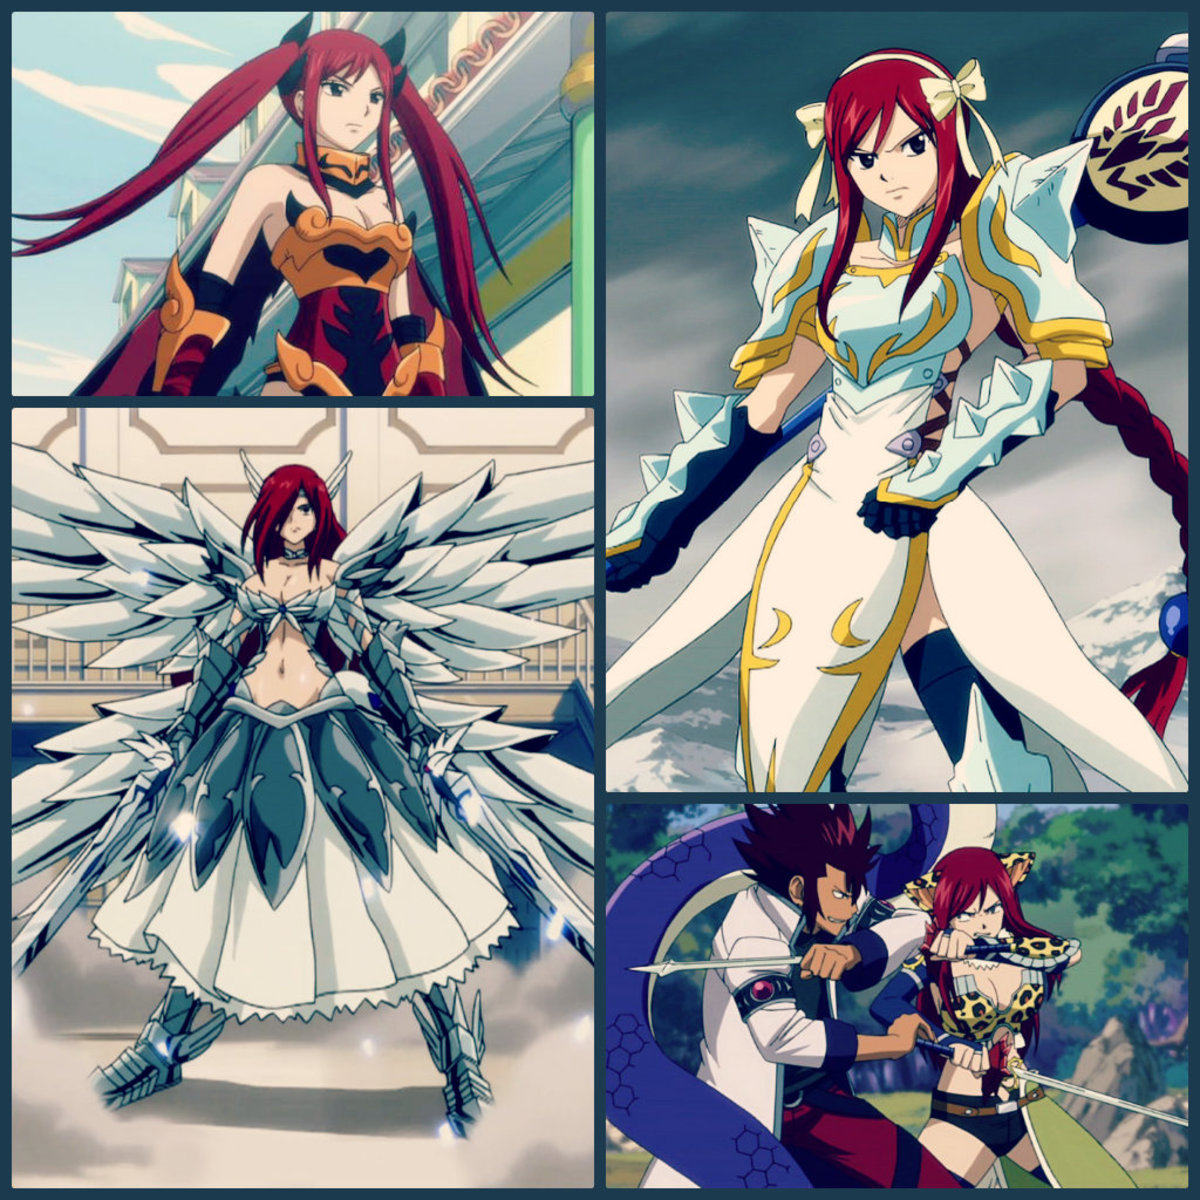 http://media.animevice.com/uploads/3/37441/635051-appearance_erza_scarlet_armor6.jpg (lower left), http://images4.fanpop.com/image/photos/23100000/Erza-titania-erza-scarlet-23128016-830-464.jpg (lower right)